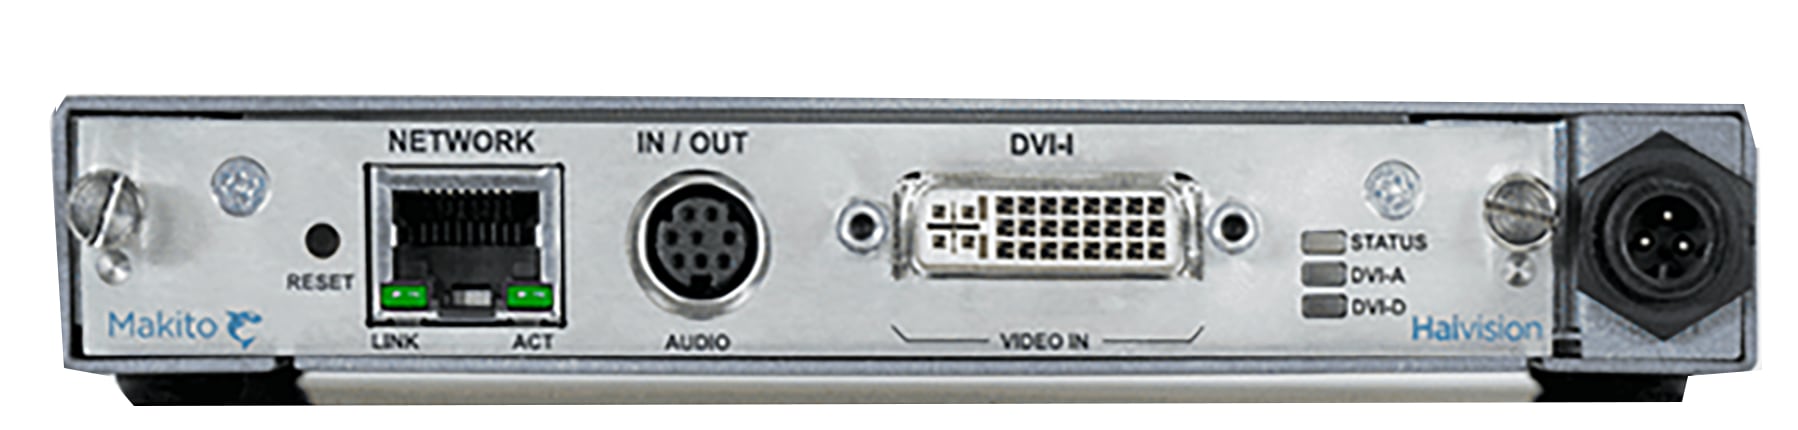 Haivision Makito X H.264 Single DVI Encoder